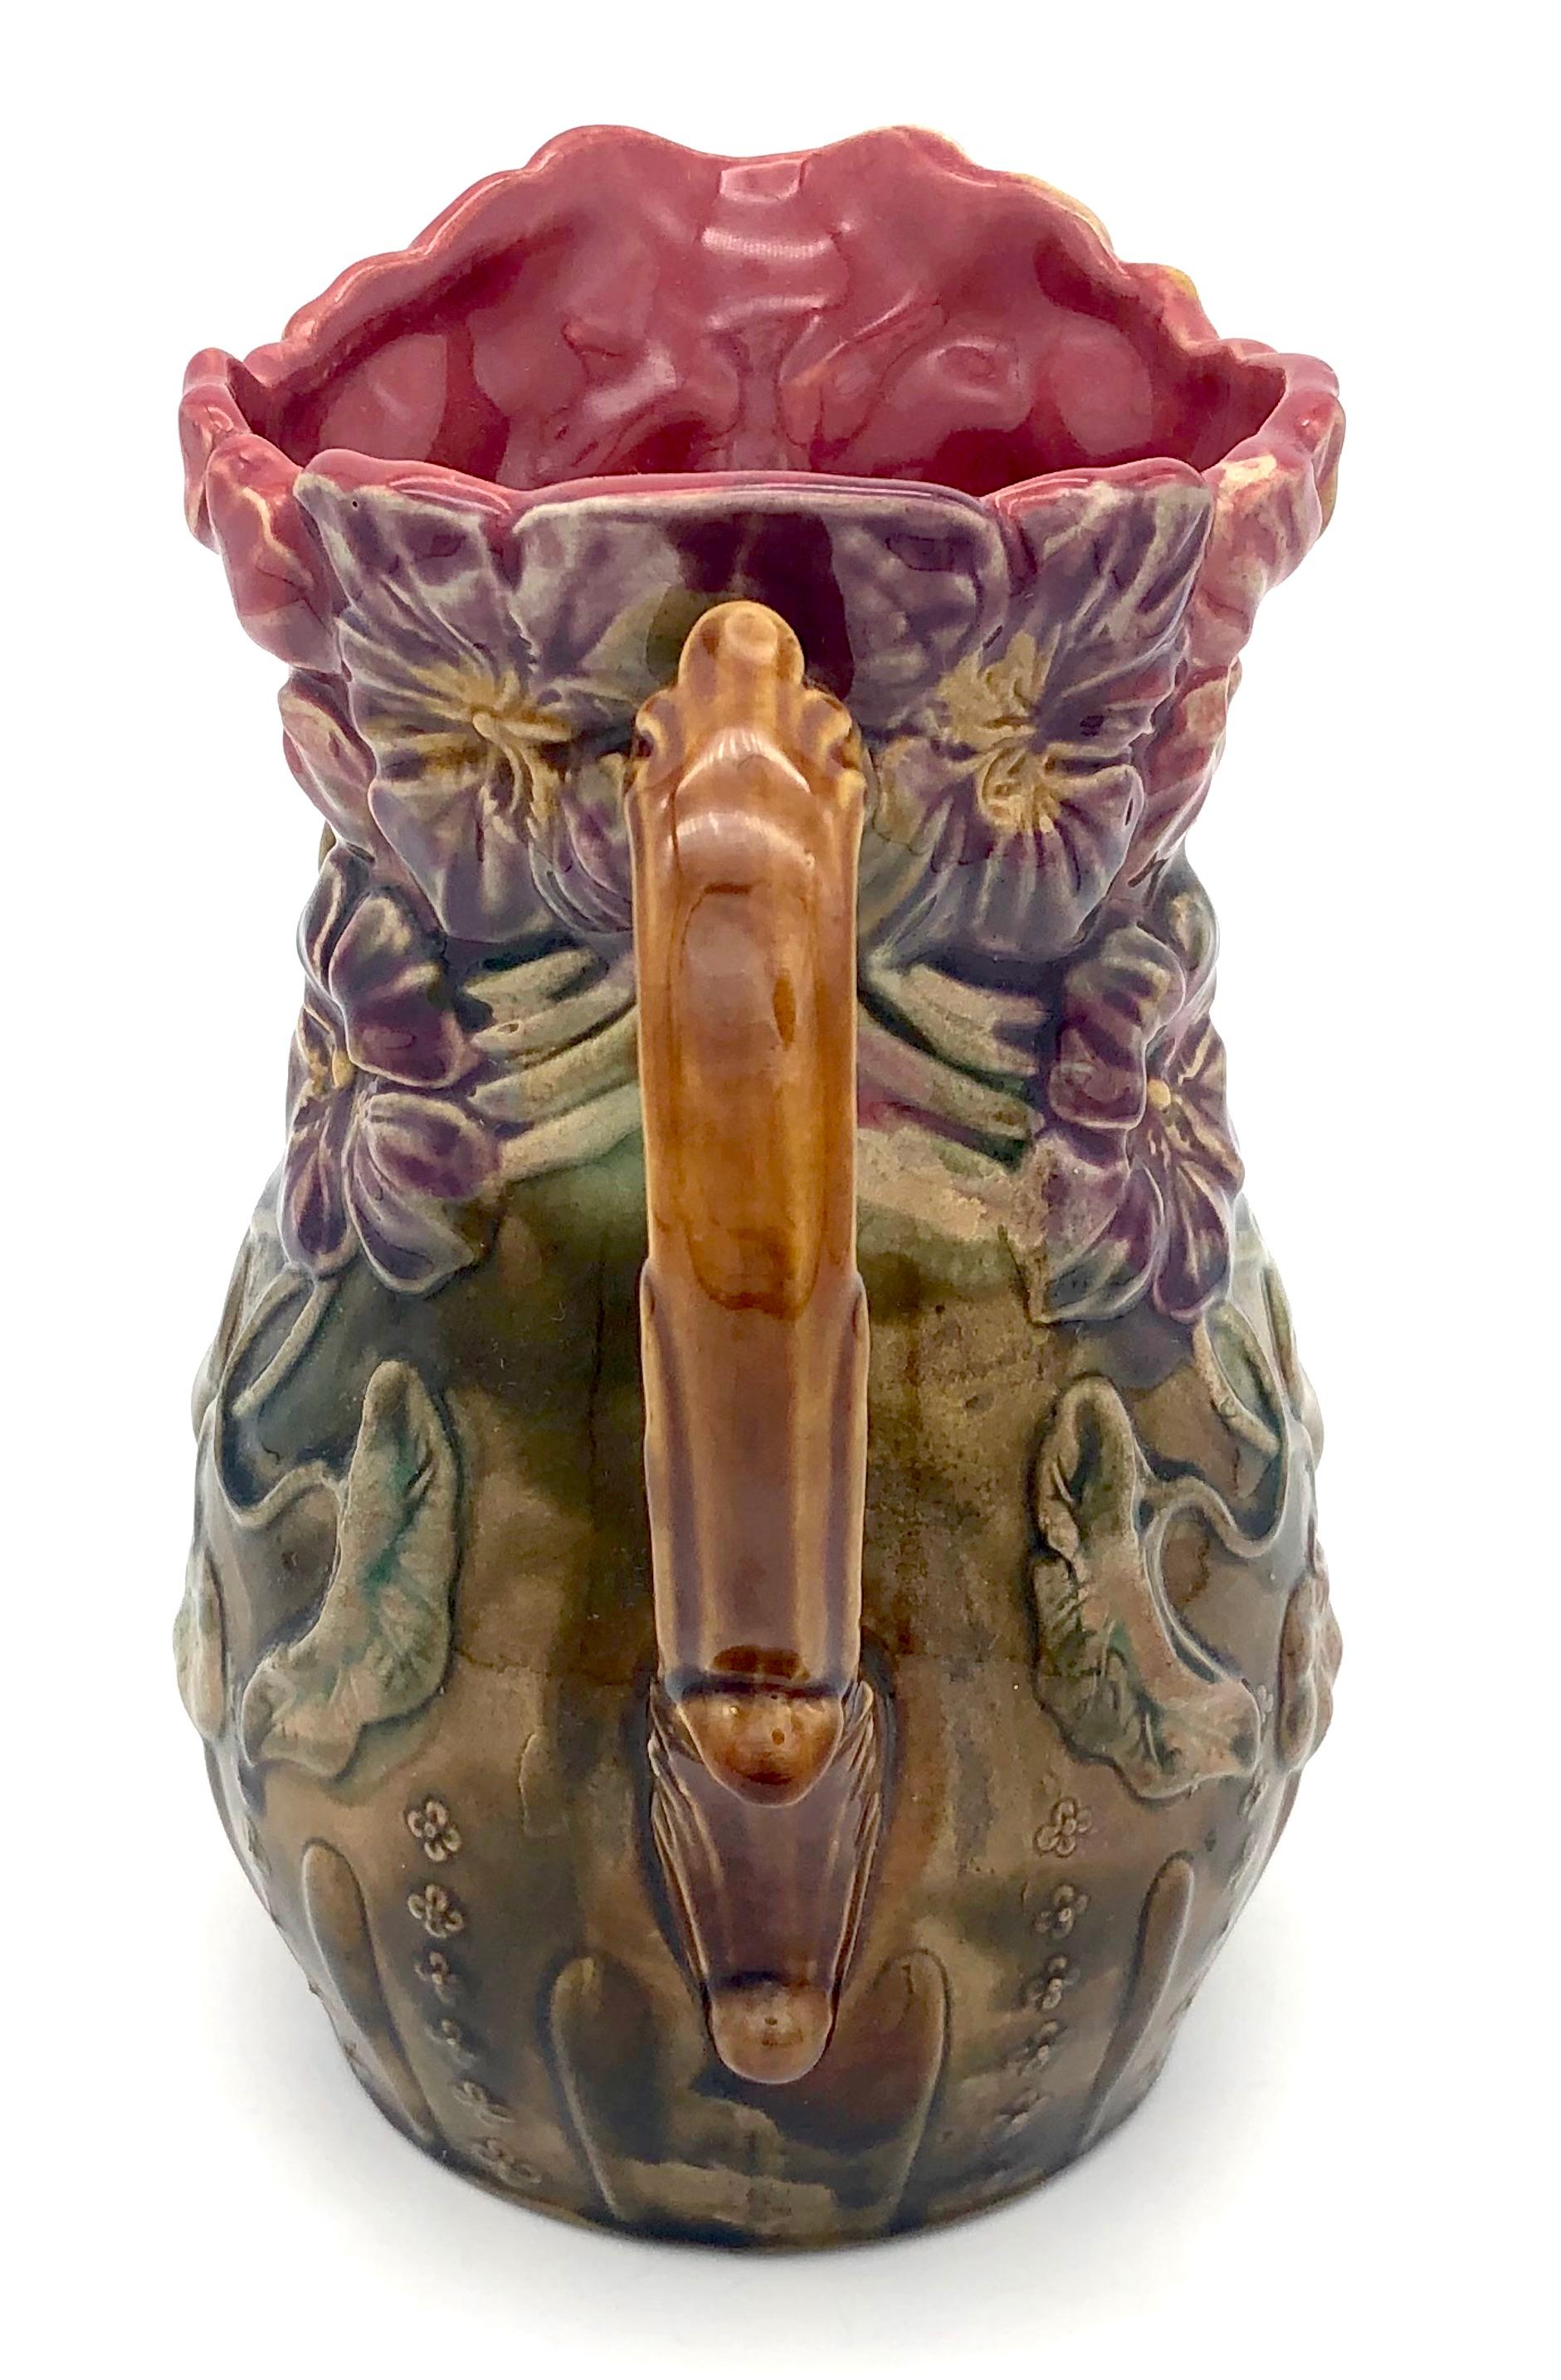 Jugendstil-Krug/ Krug aus Keramik, polychrome Glasur, Blumenrelief, Nasturtiums (Art nouveau) im Angebot